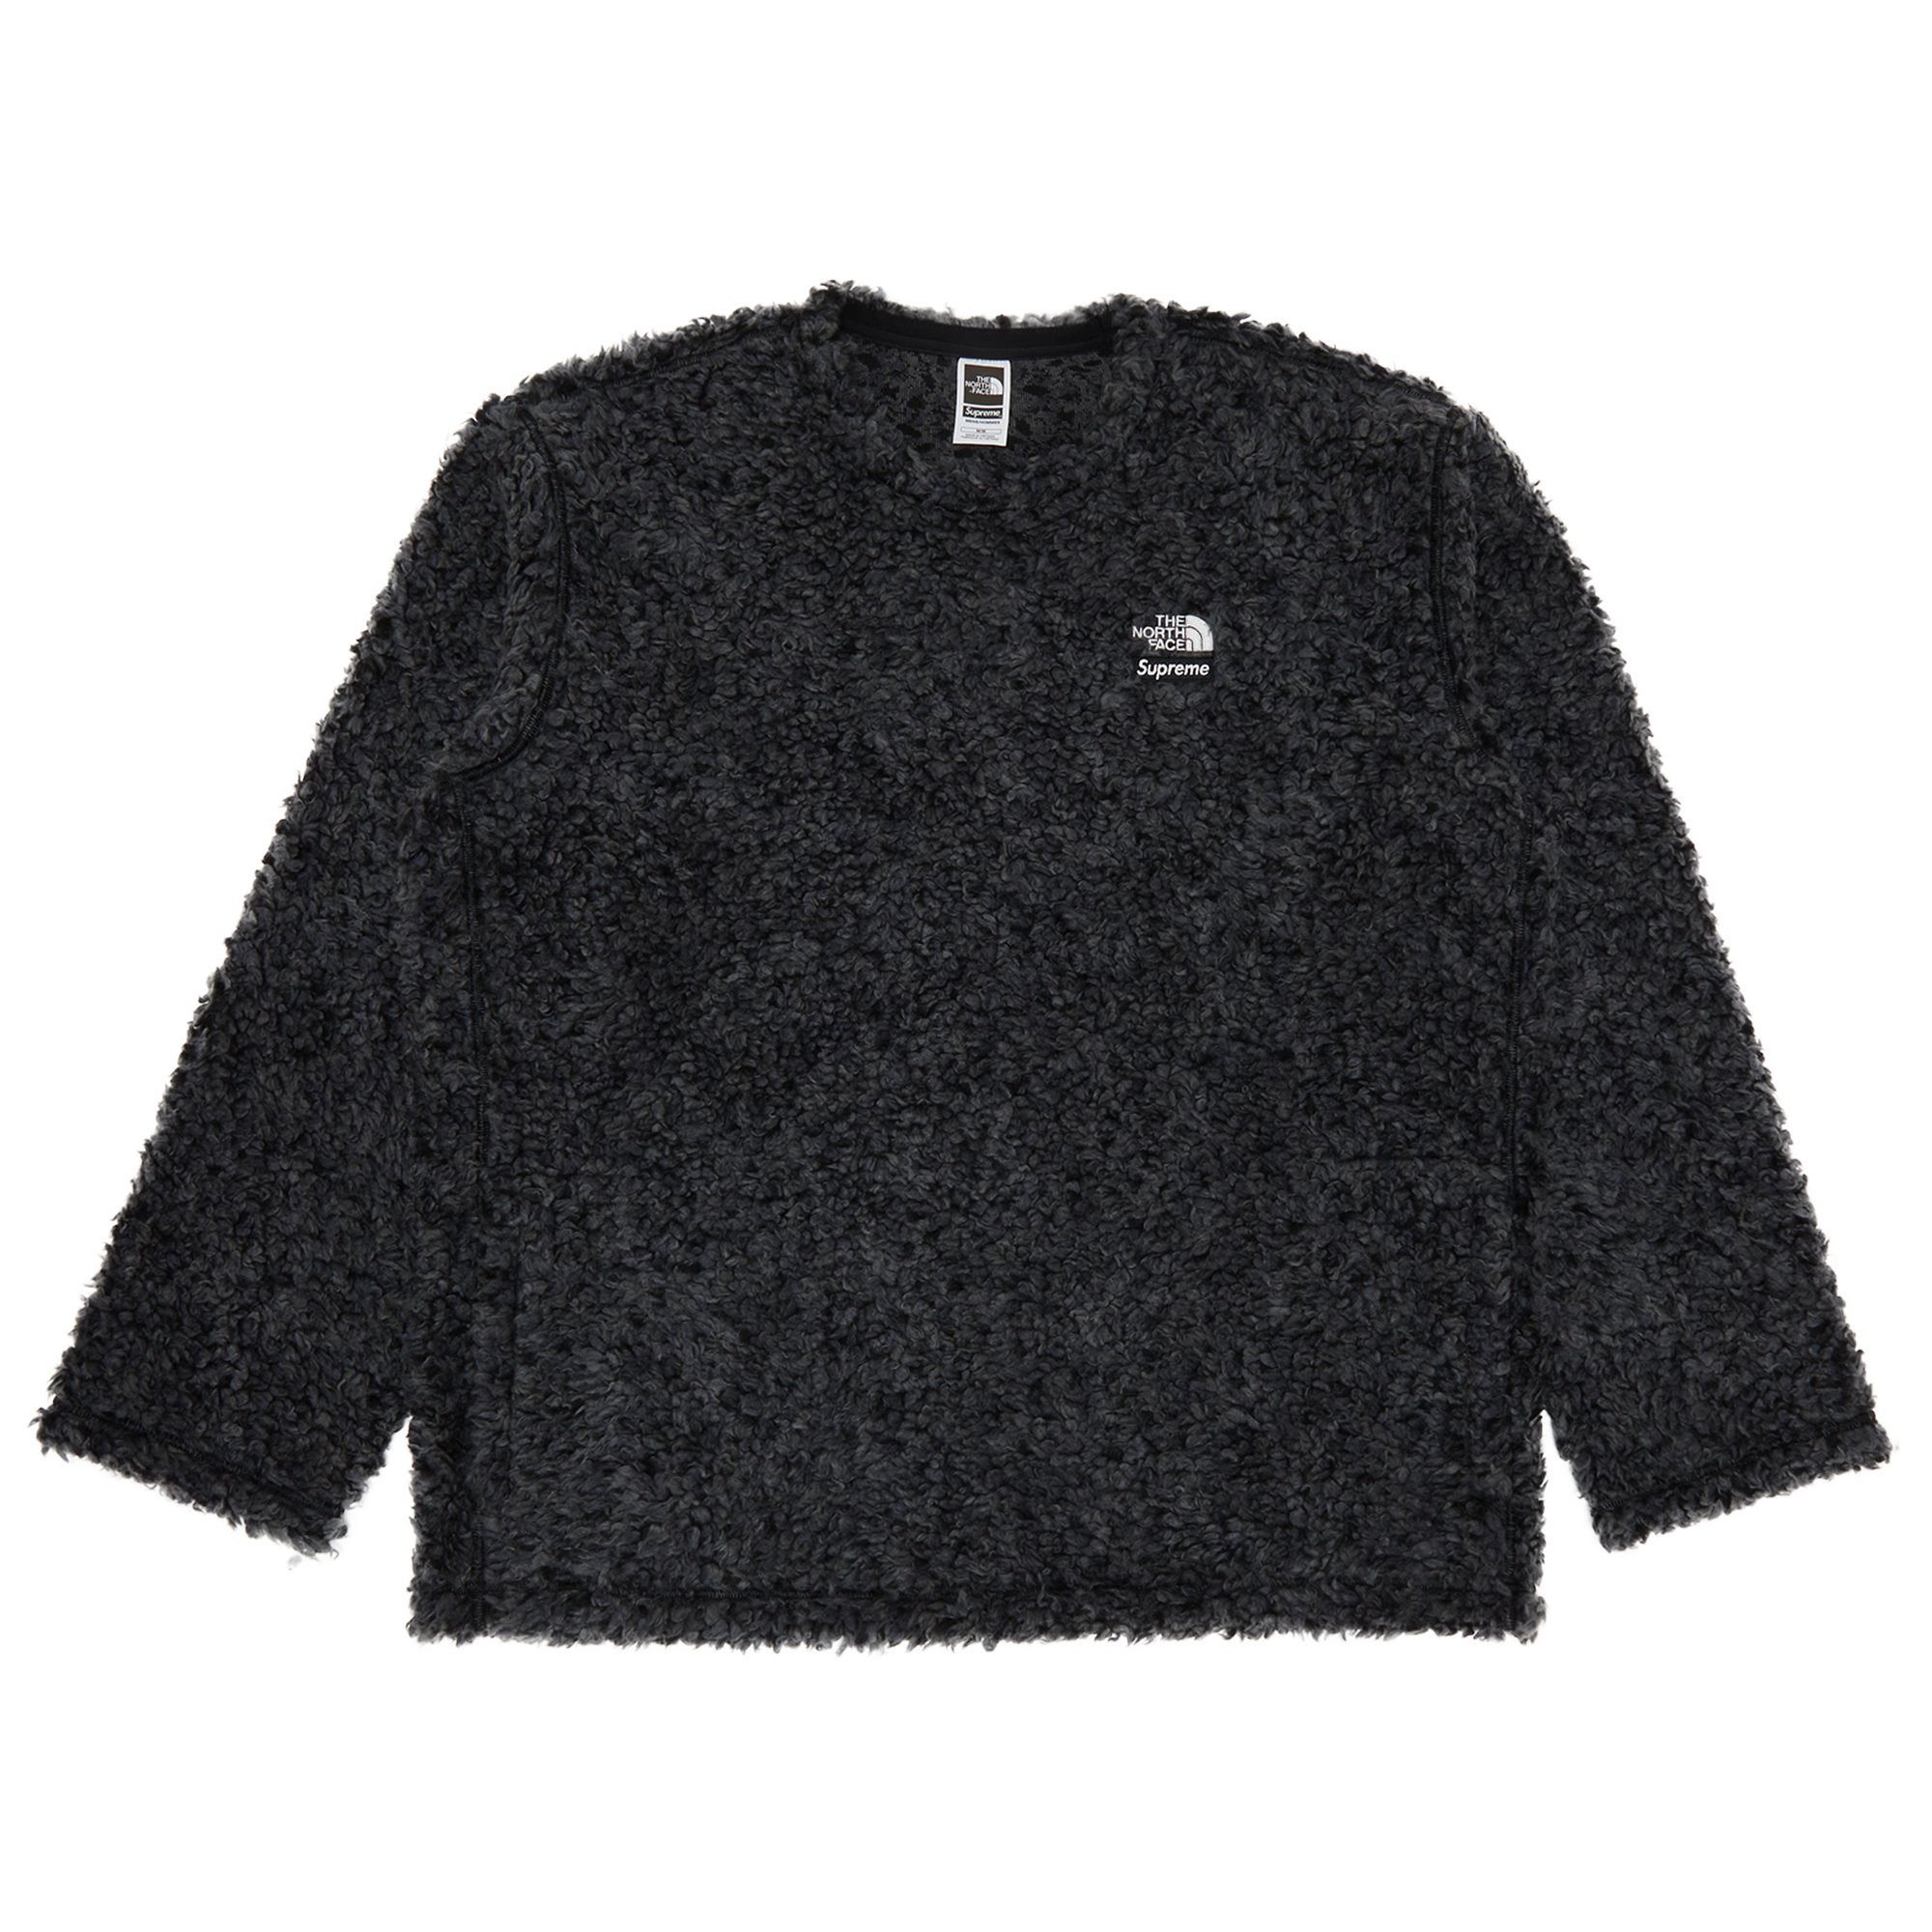 Supreme x The North Face High Pile Fleece Long-Sleeve Top 'Black'